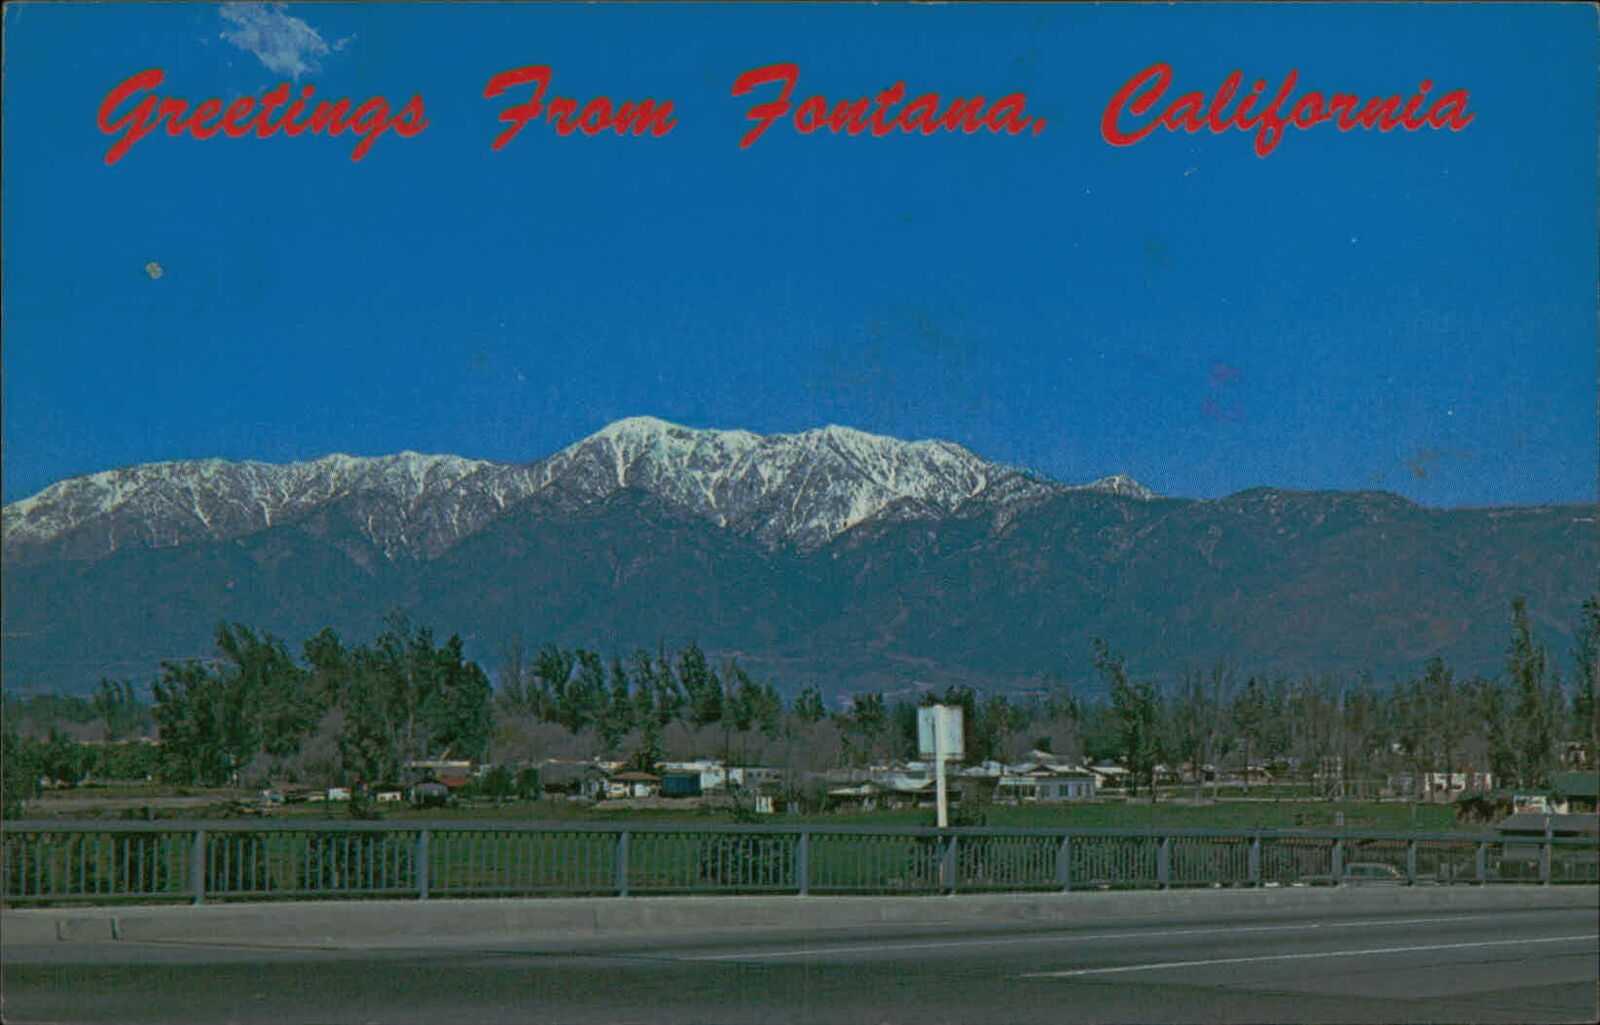 Postcard: GREETINGS FROM Fontana, California